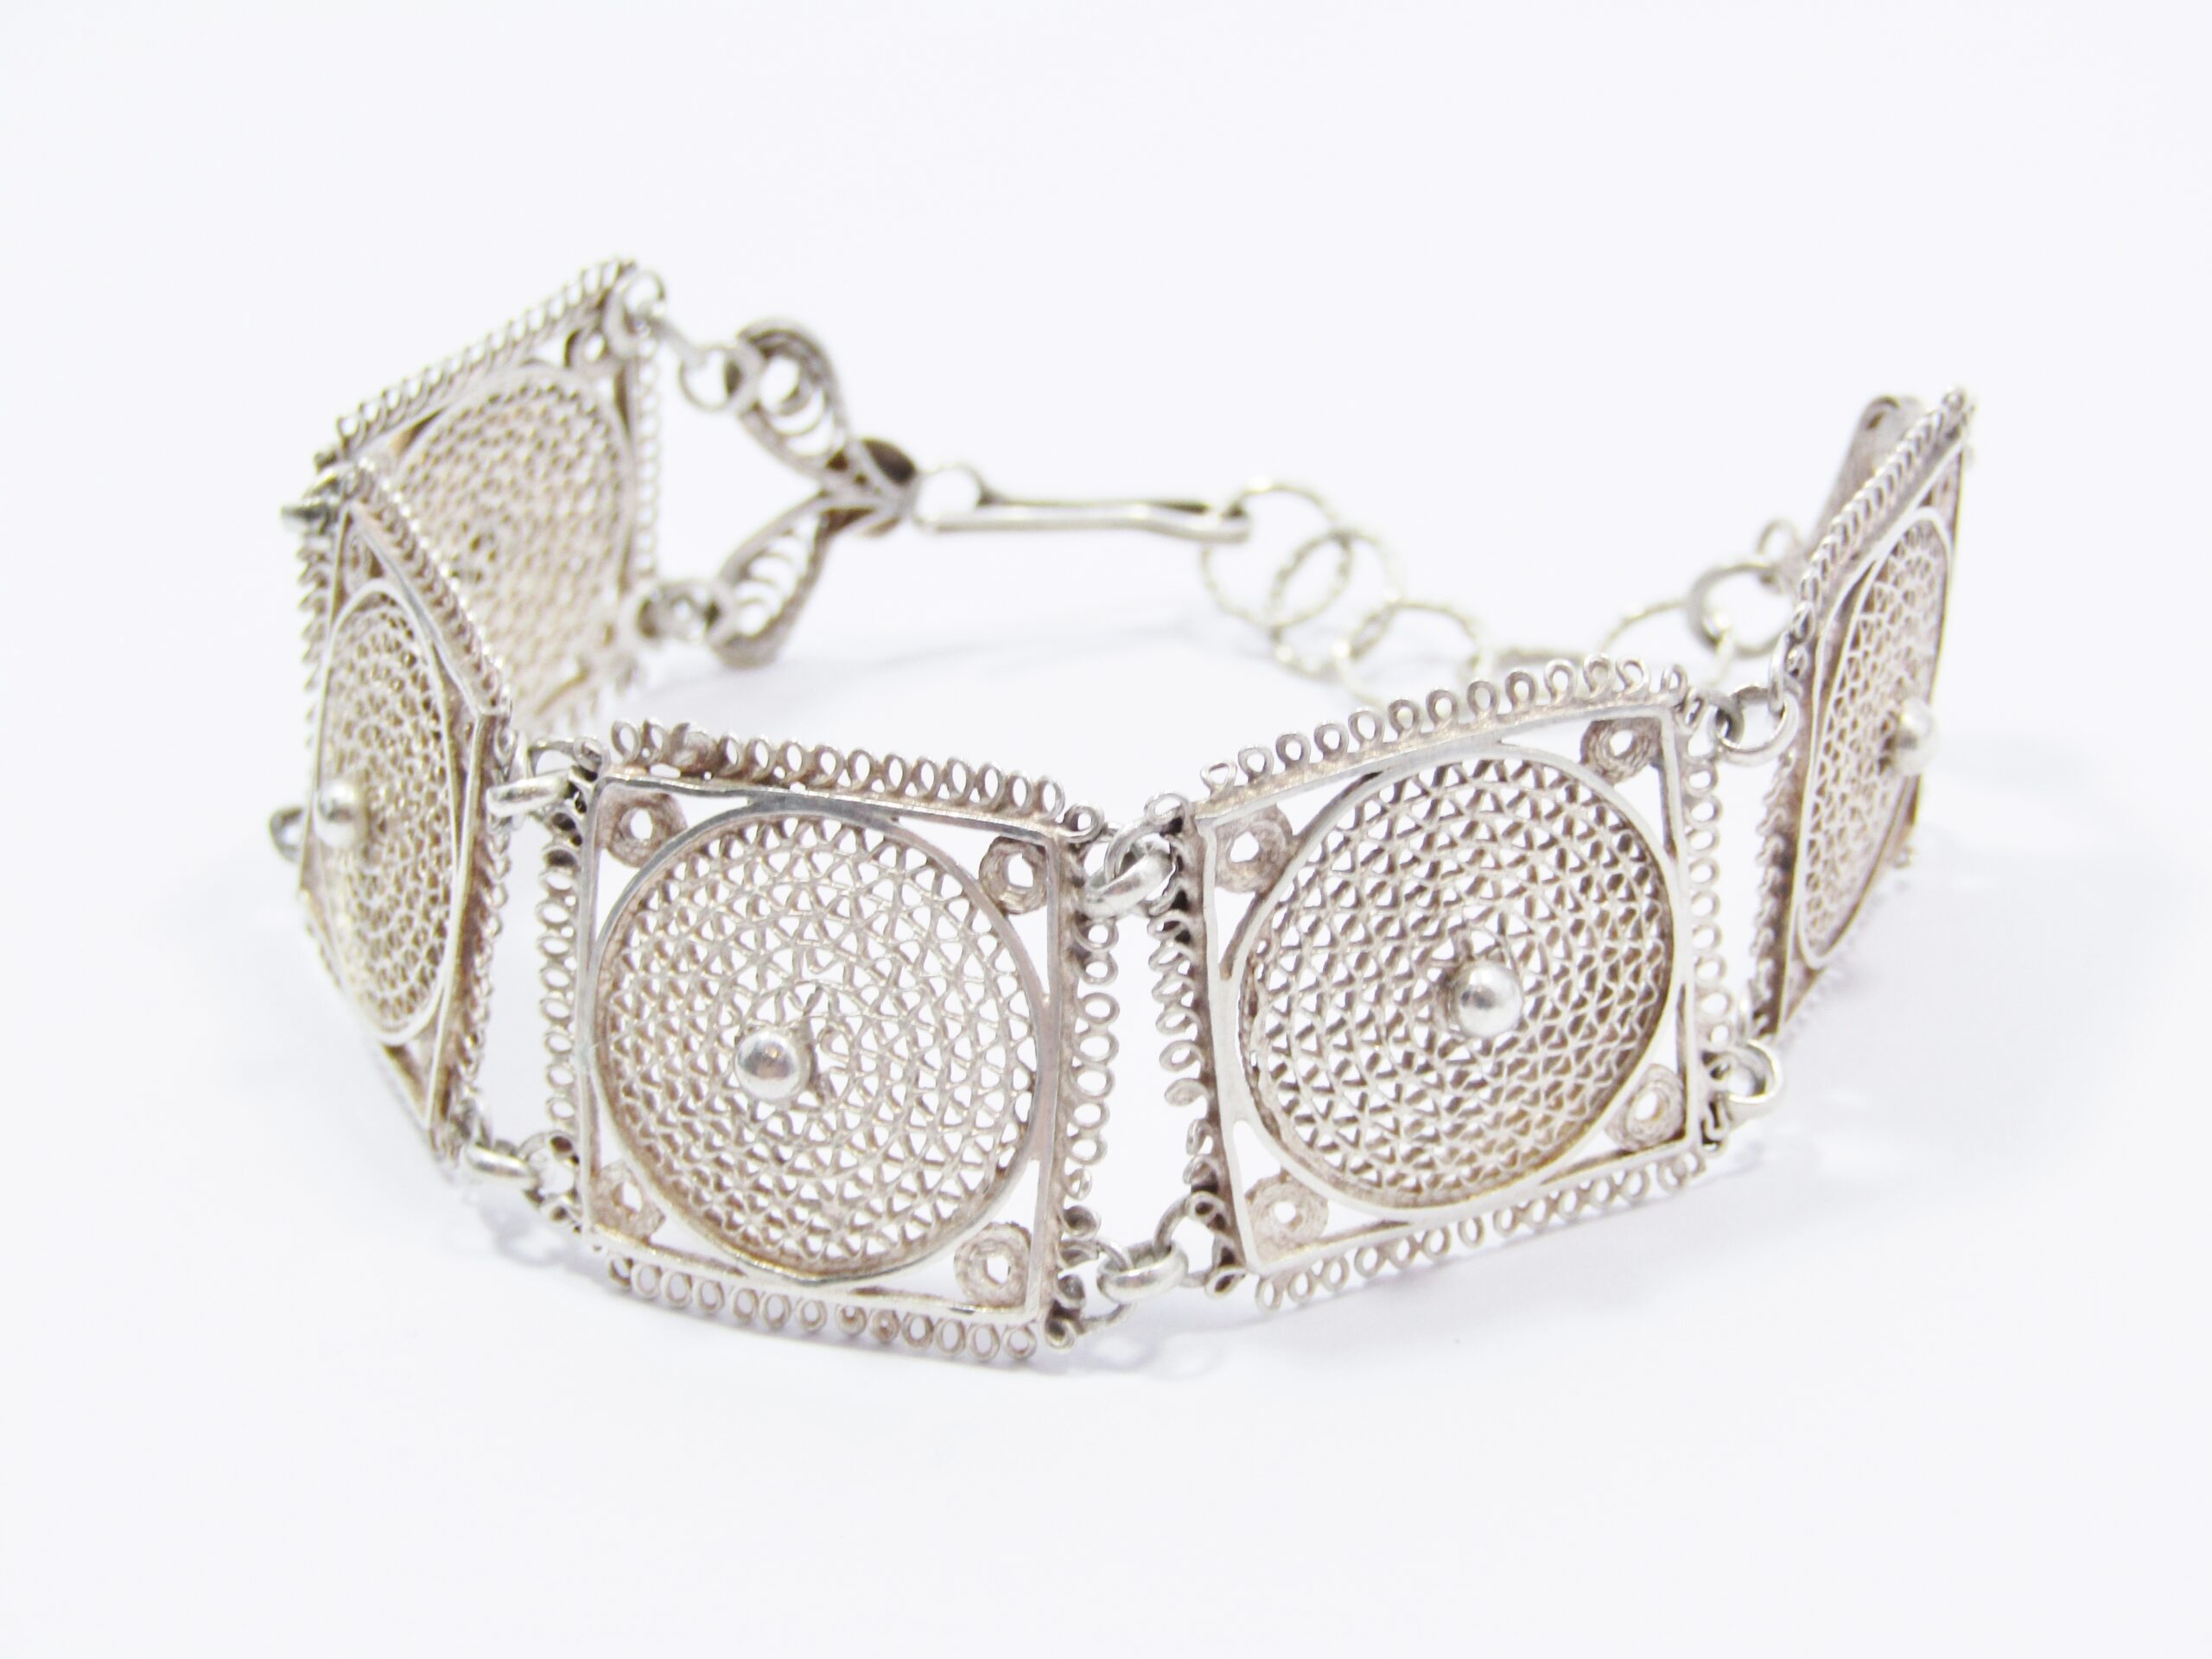 A Lovely Filigree Design Bracelet in 800 Silver.